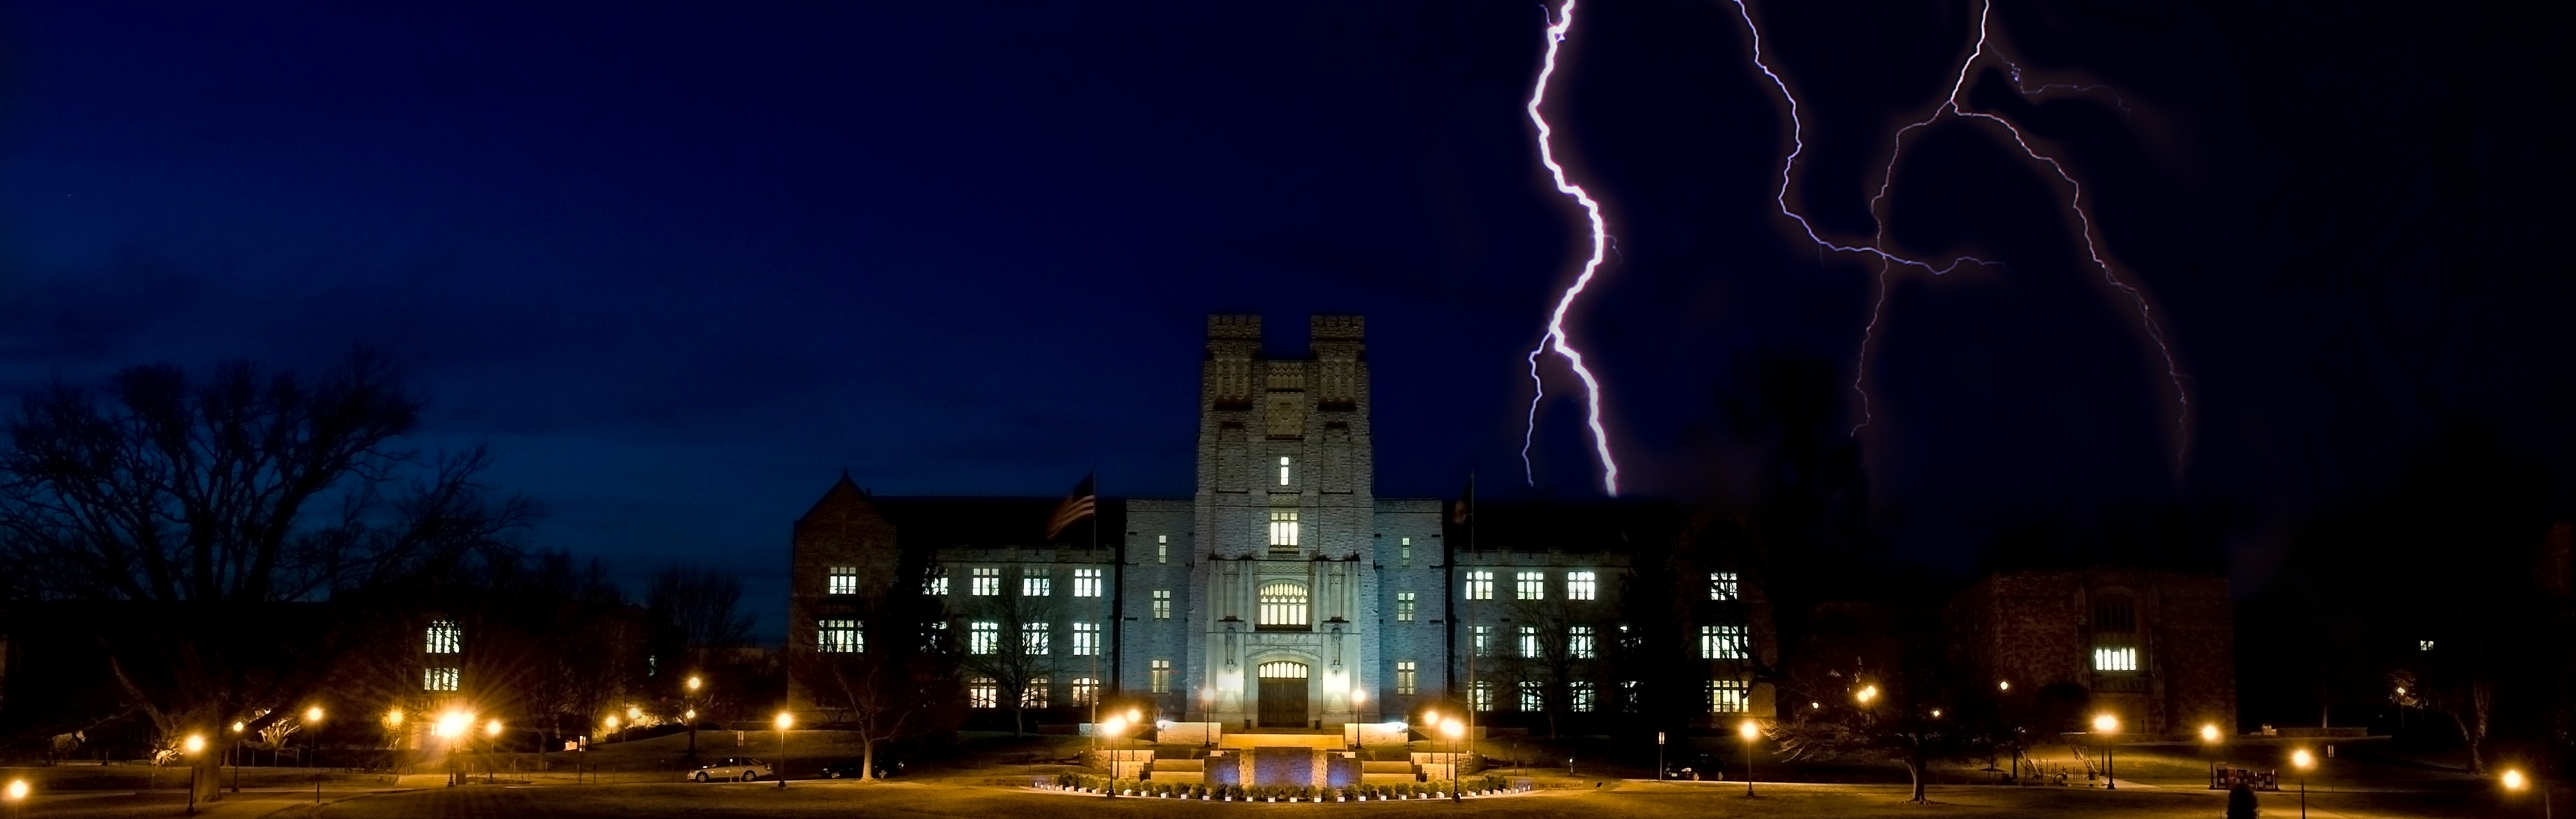 Lightning over Burruss Hall